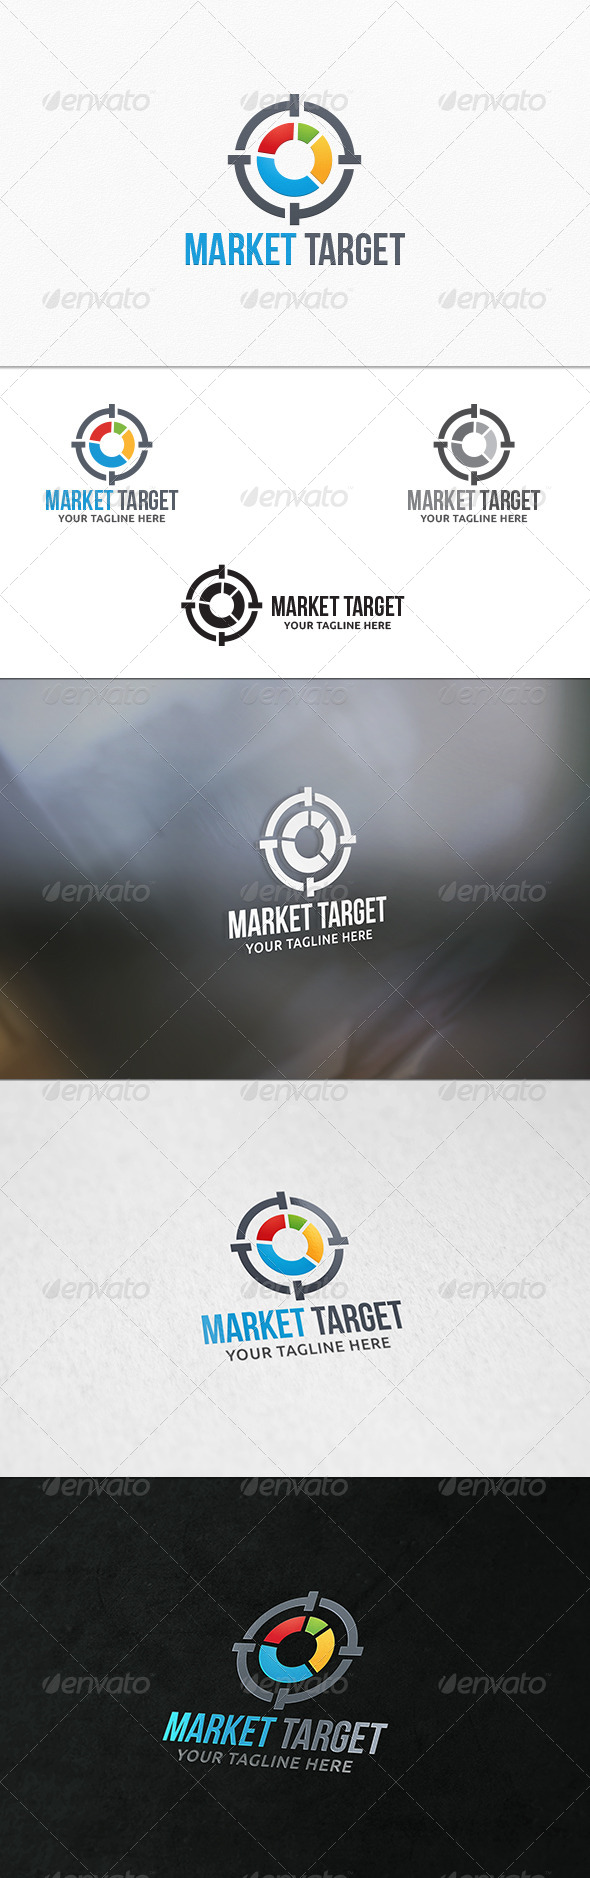 Market Target - Logo Template